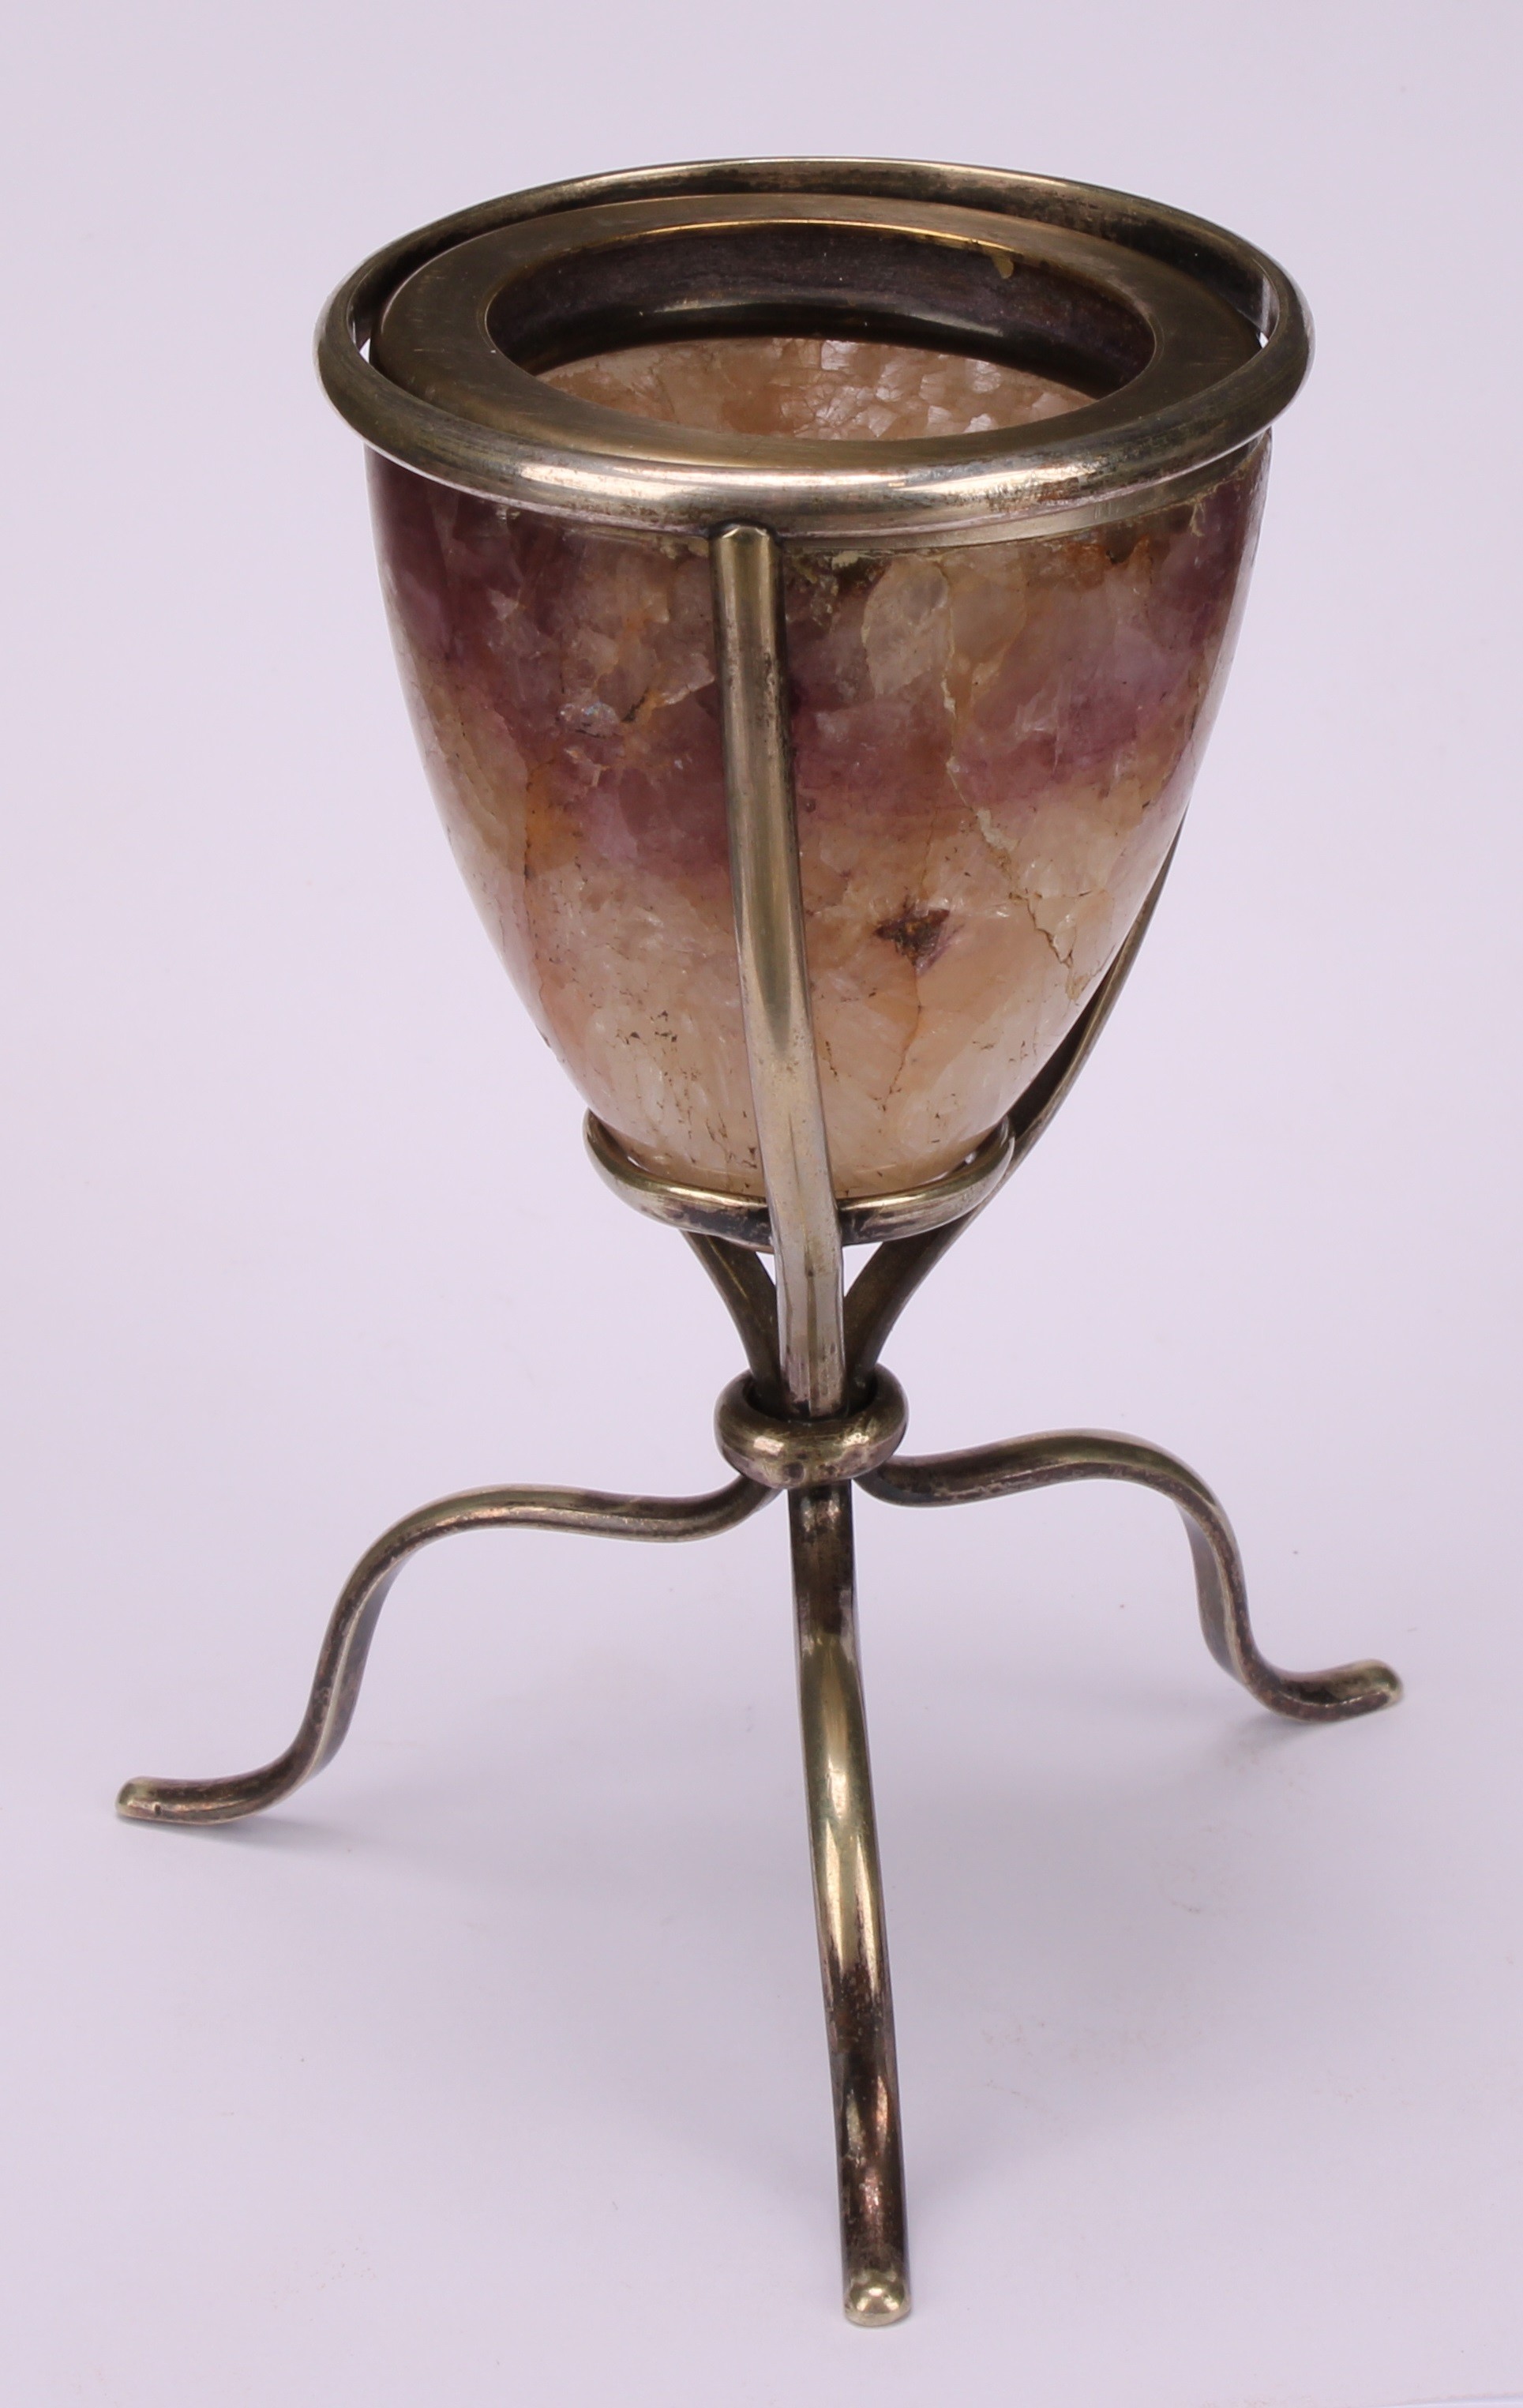 A Derbyshire Blue John egg shaped specimen vase, silver plated tripod stand, 11cm high, 19th century - Image 3 of 5